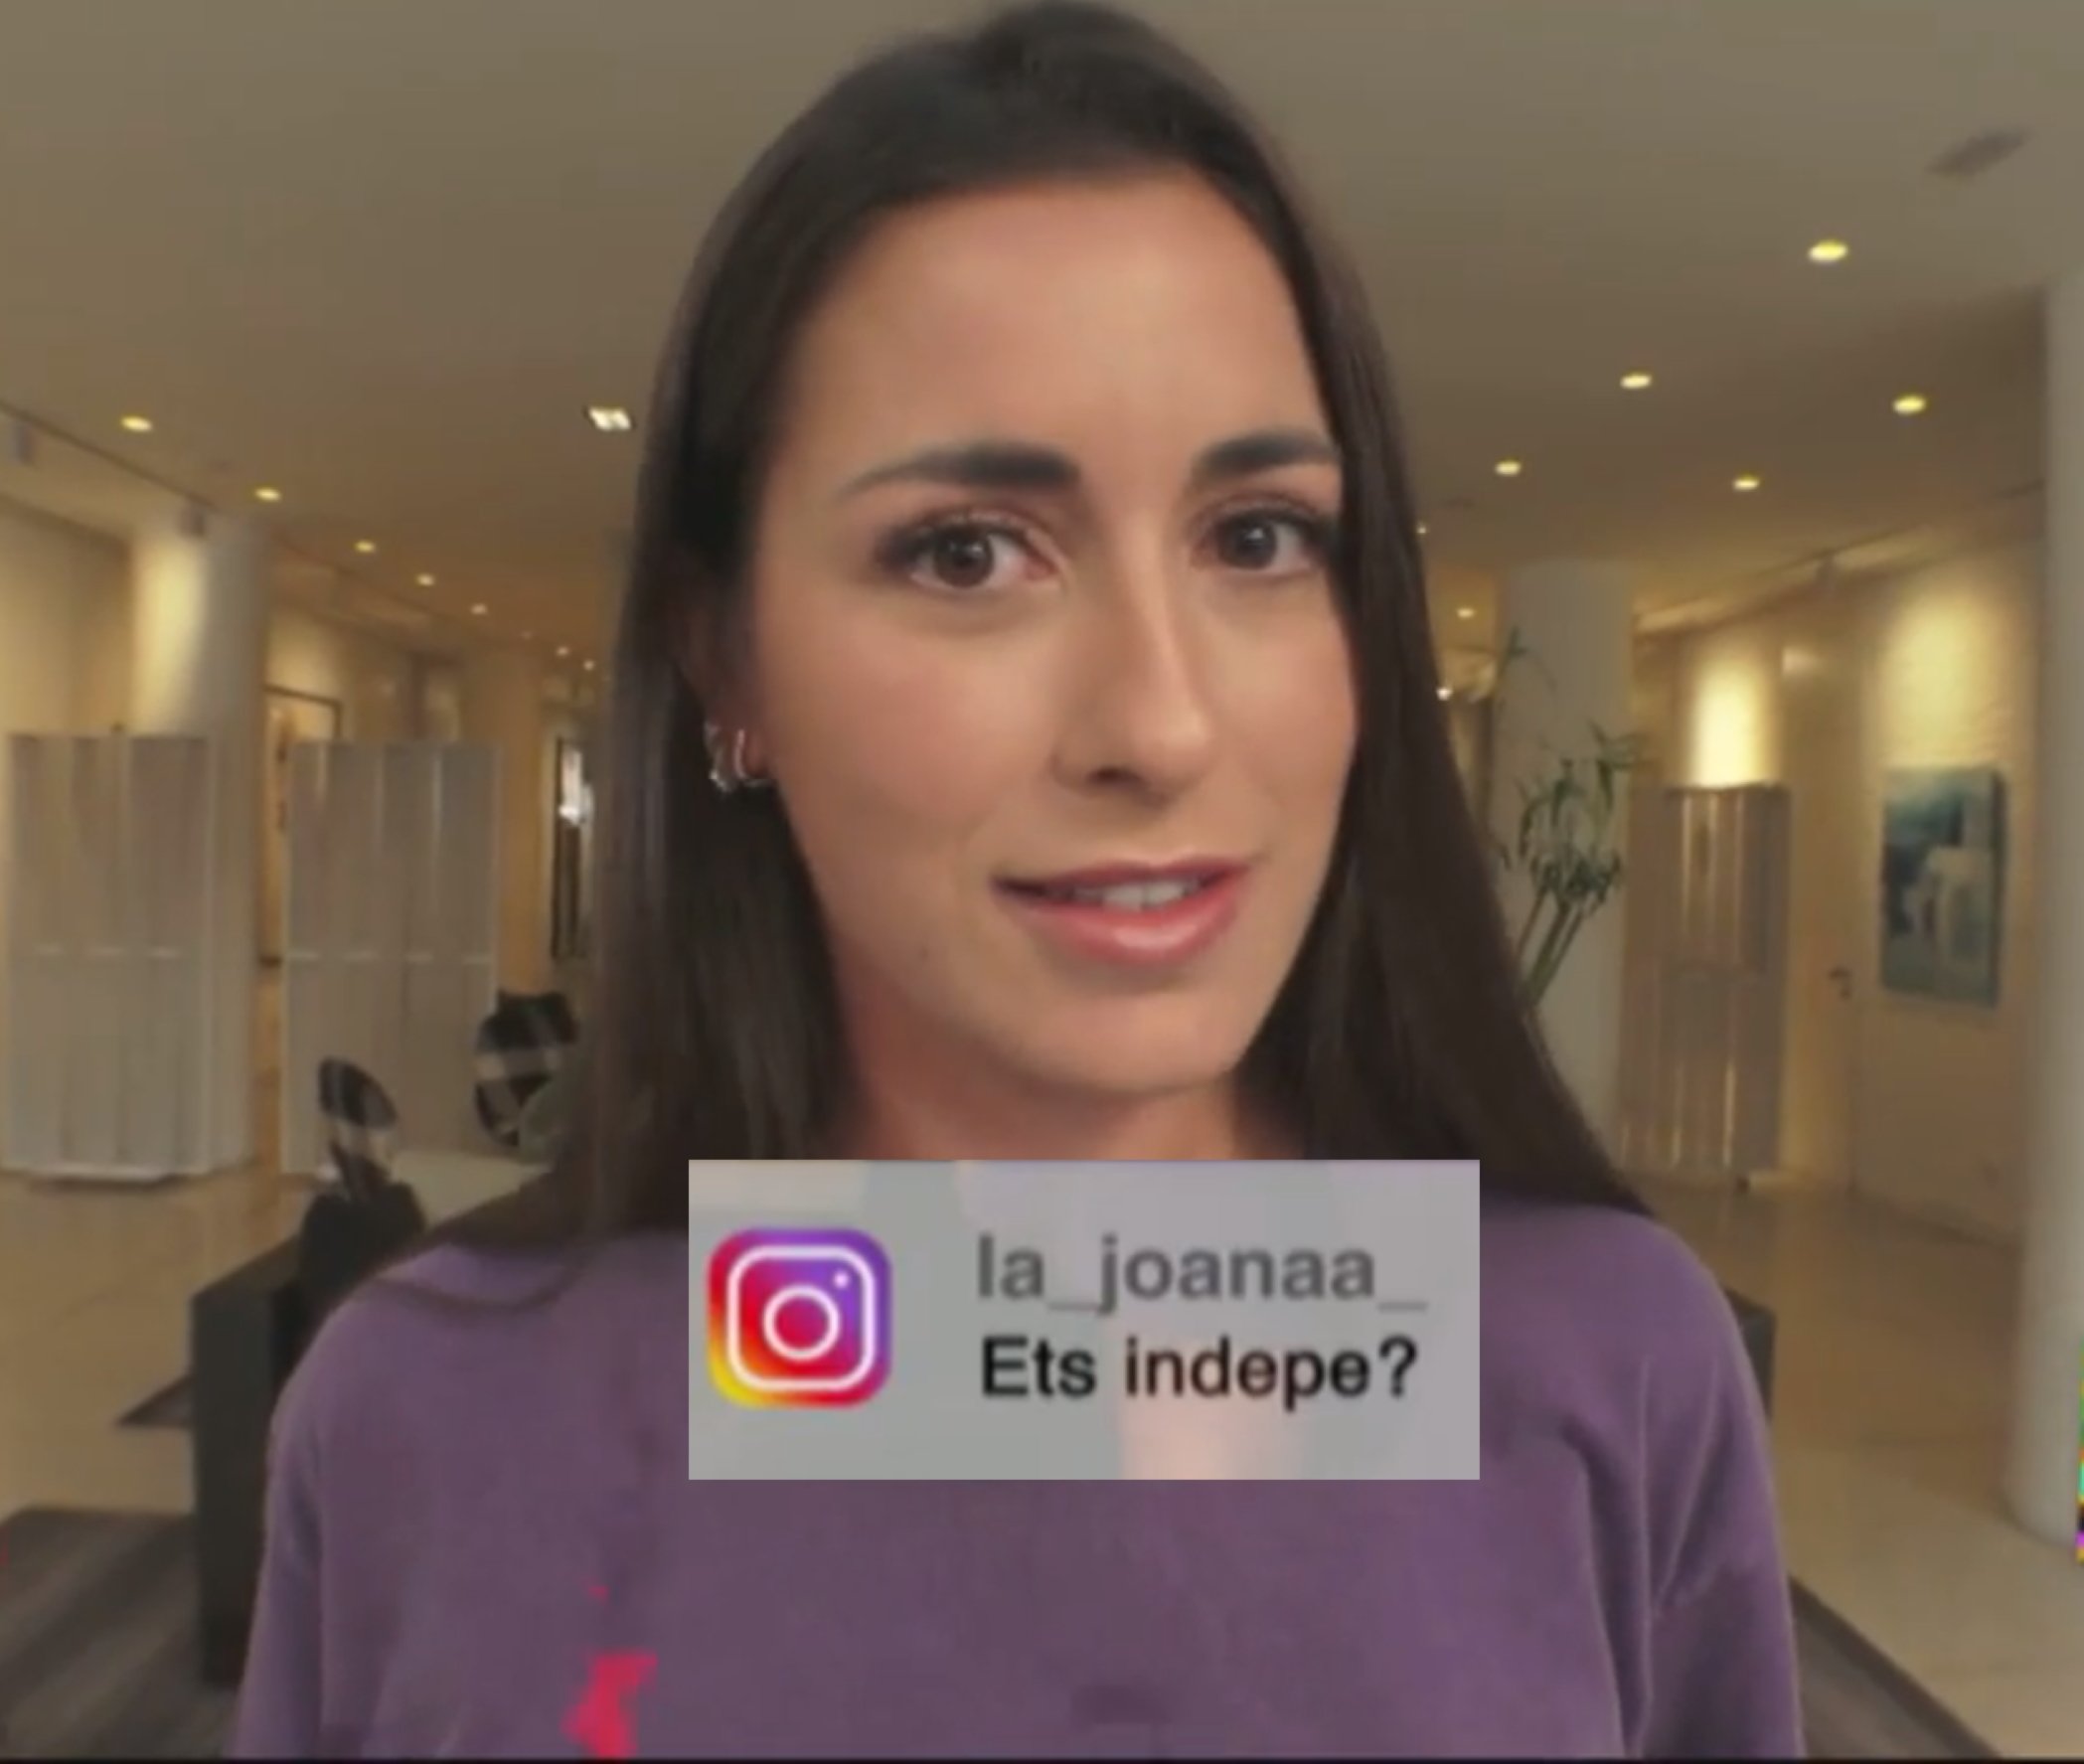 La famosa youtuber catalana Paula Gonu, en TV3: "¿Si soy indepe?"